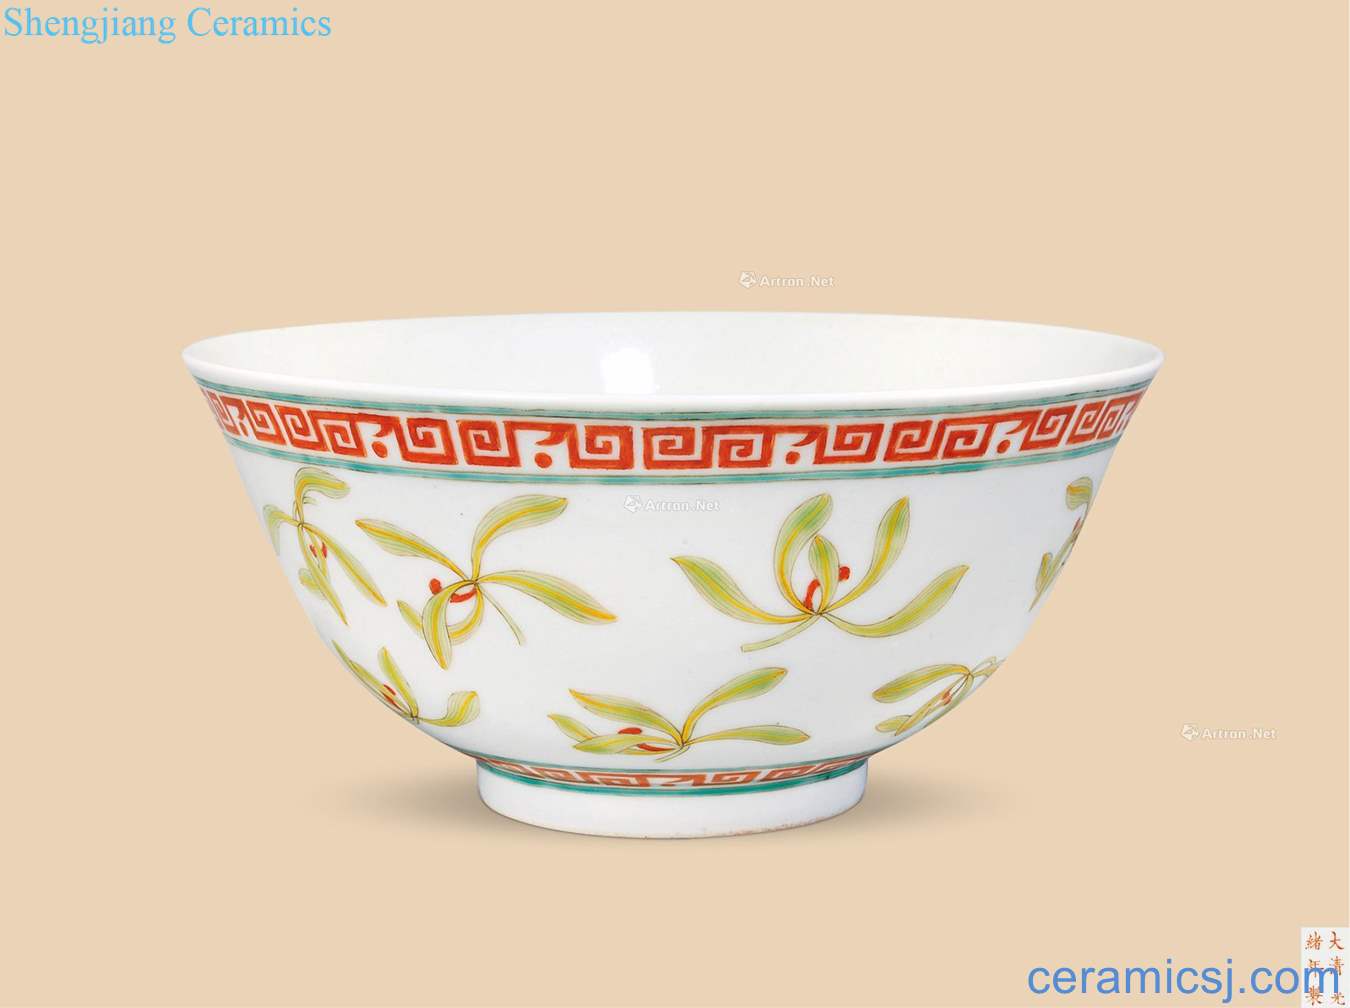 Qing guangxu bowl the pastel blue pattern